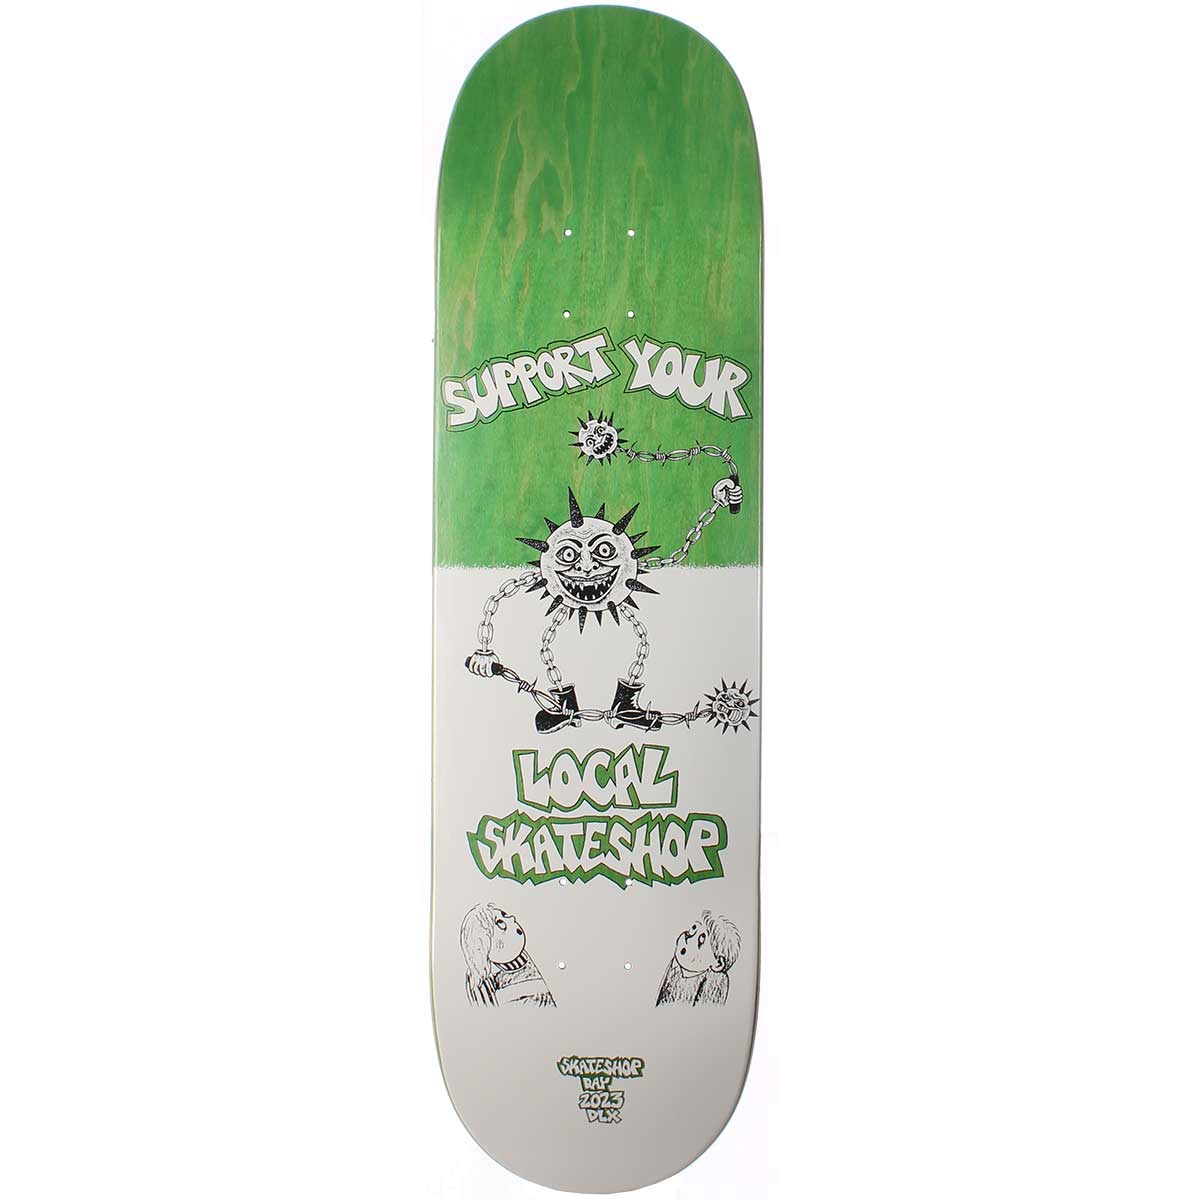 vriendelijk agitatie Milieuactivist Deluxe Support Your Local Skateshop Skateboard Deck - Green Stain 8.06x31.8  | SoCal Skateshop